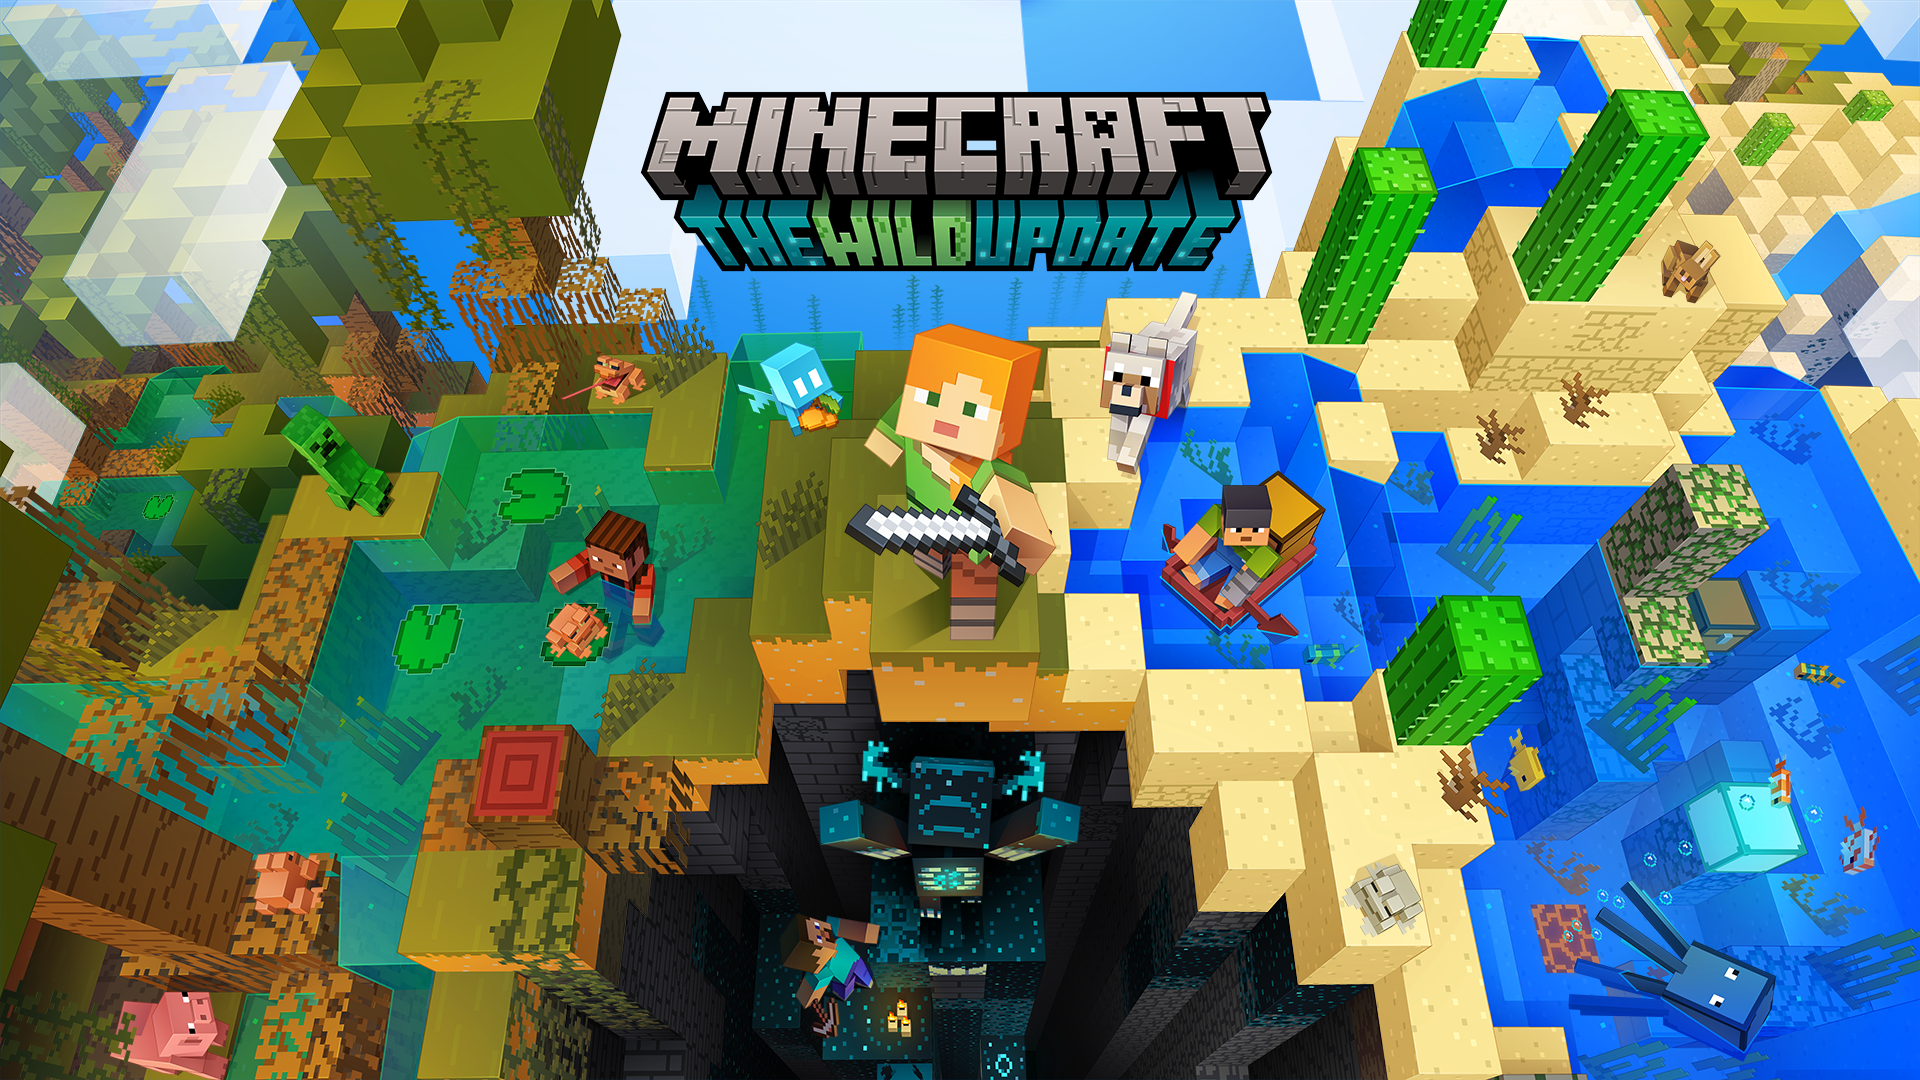 Mojang warn that Minecraft: Story Mode downloads may vanish